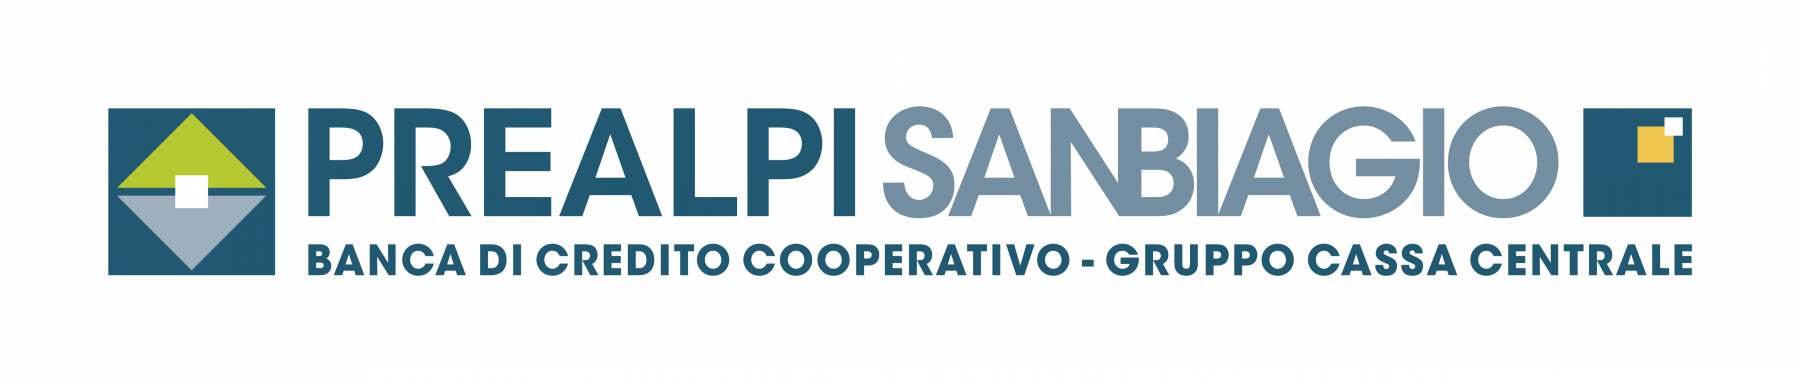 Logo_PrealpiSanBiagio_ESTESO_rgb